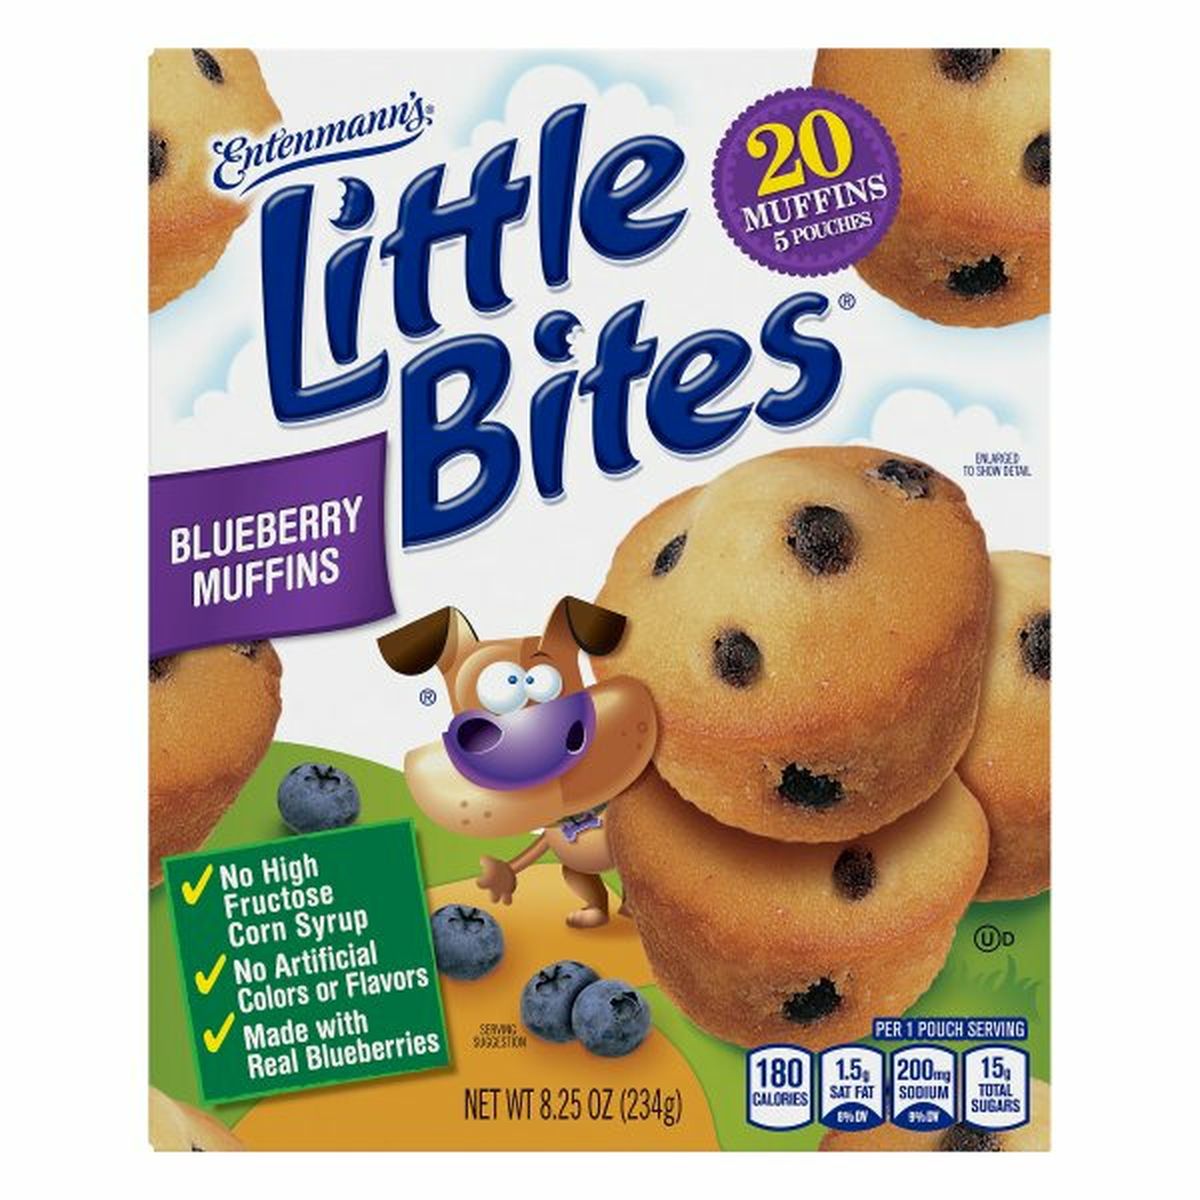 Calories in Entenmann's Little Bites Muffins, Blueberry